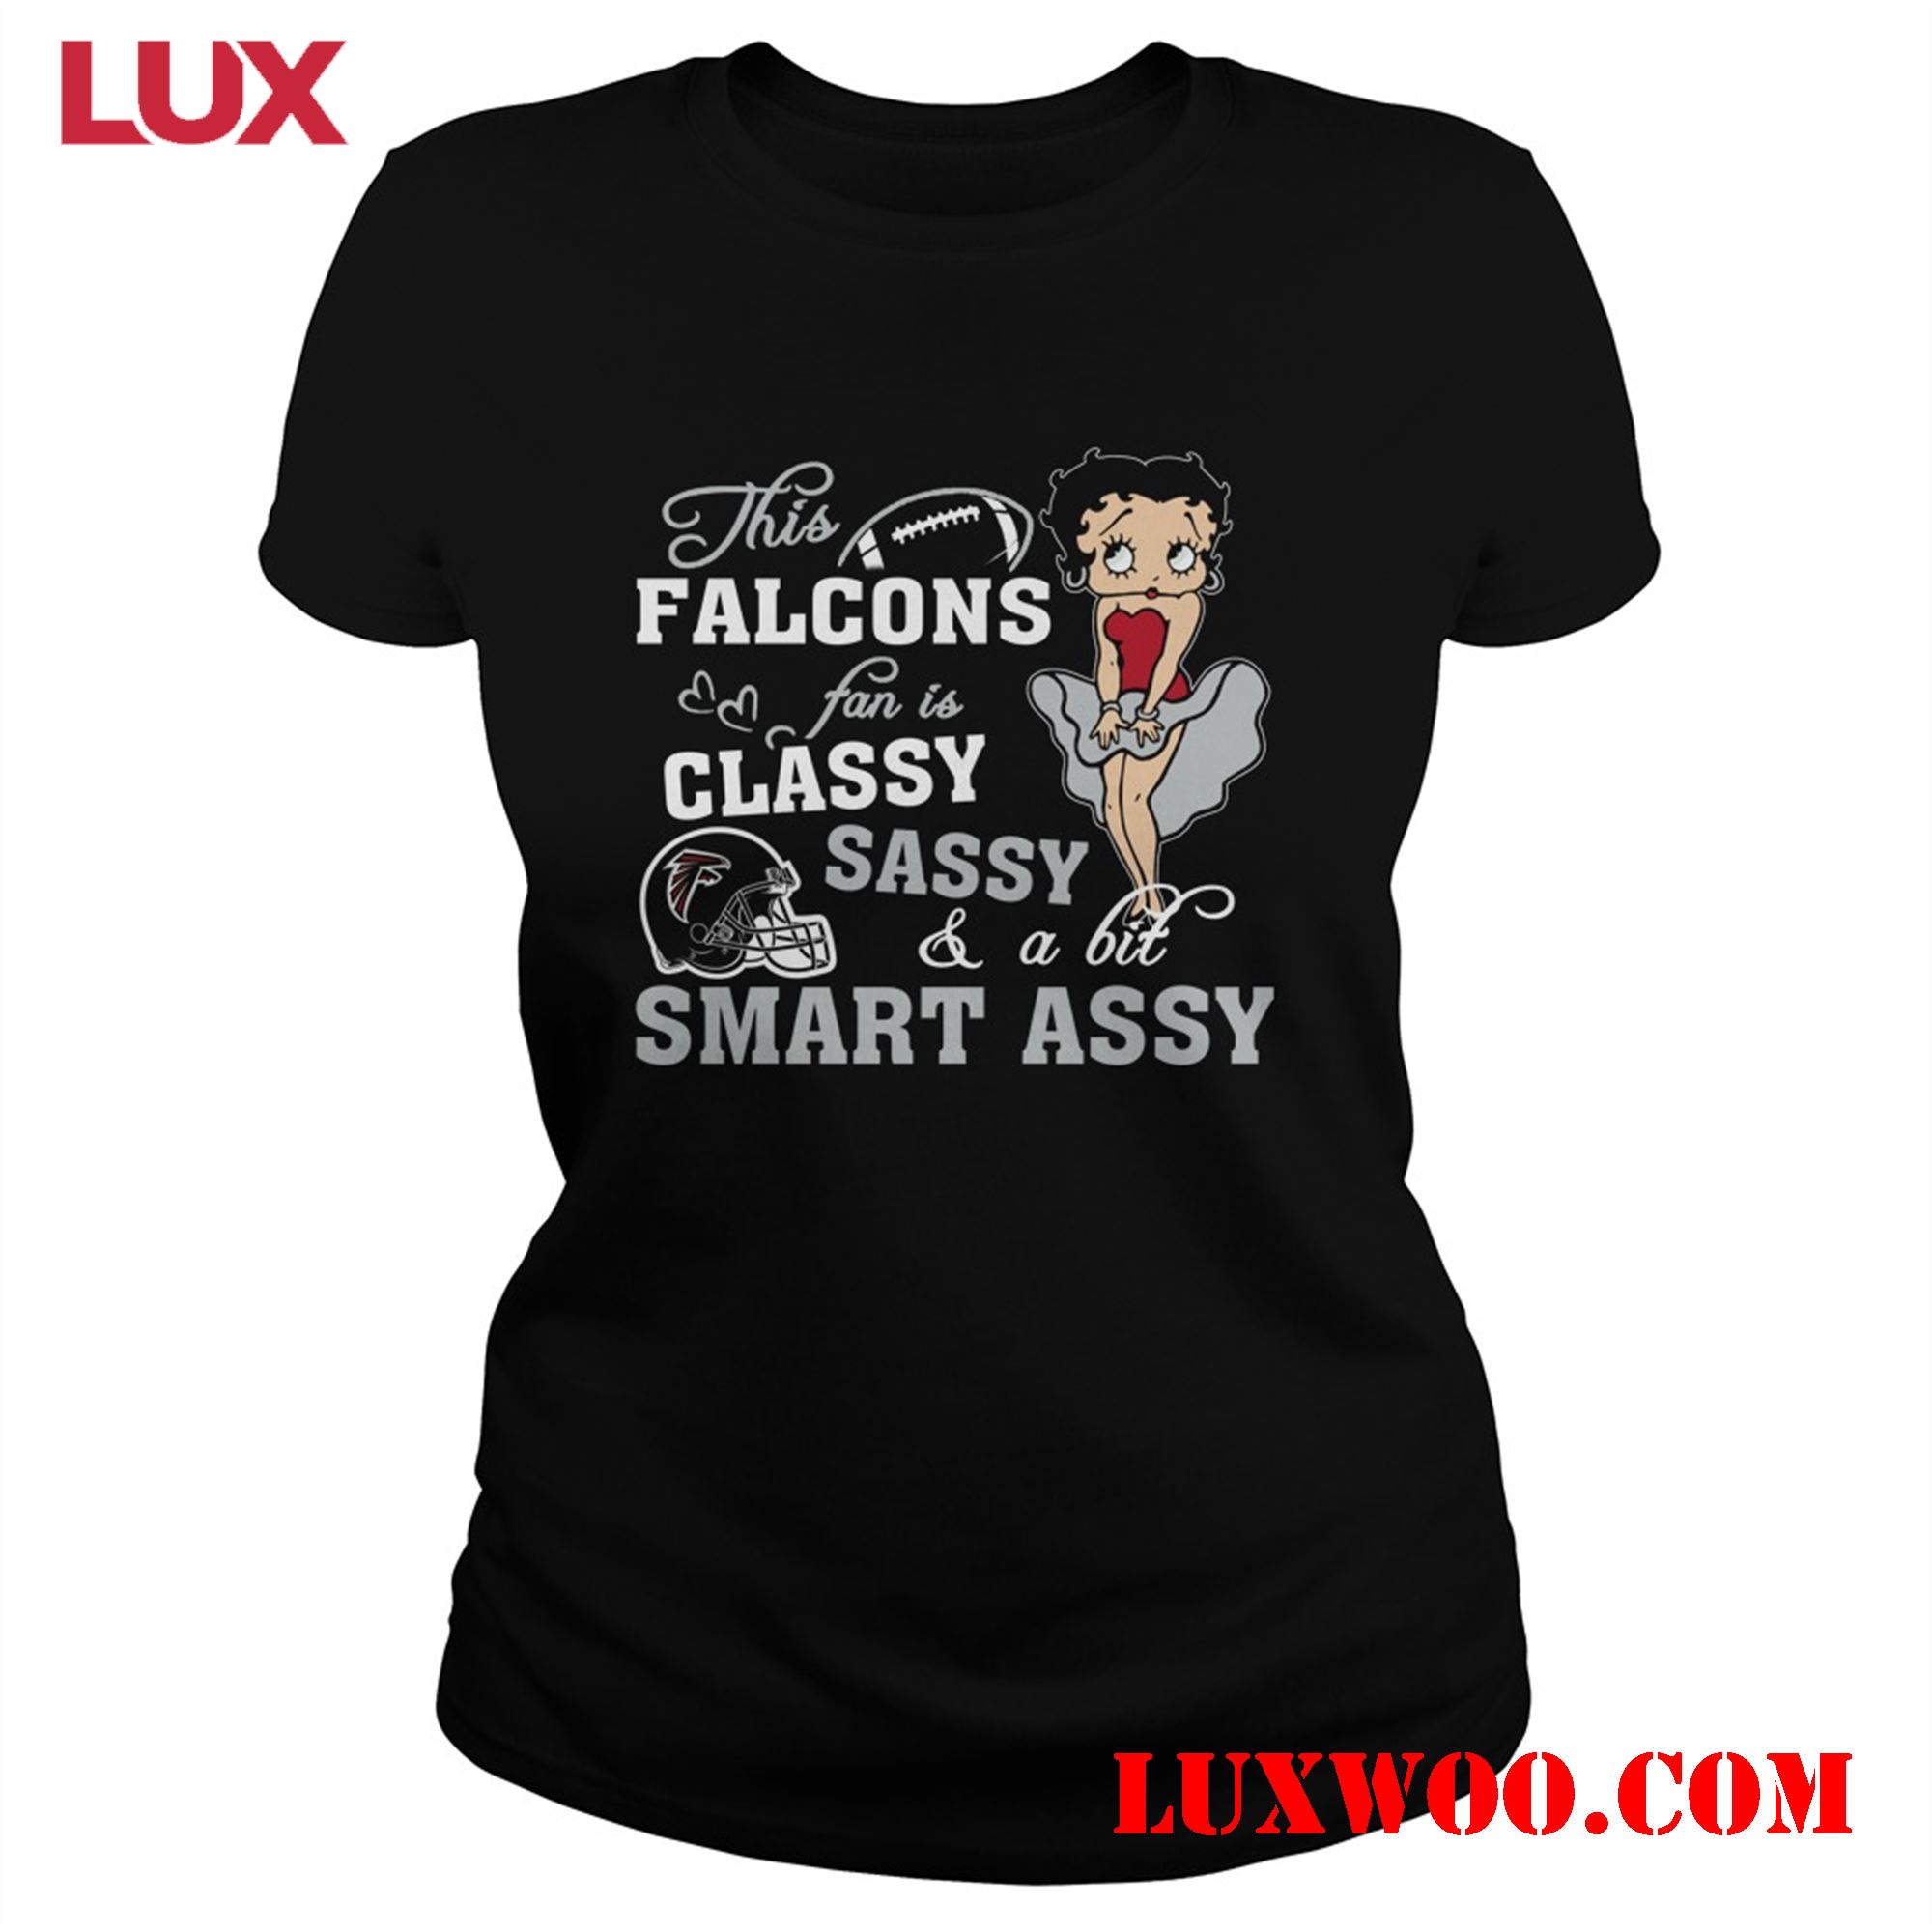 Nfl Atlanta Falcons This Atlanta Falcons Fan Is Classy Sassy And A Bit Smart Assy 